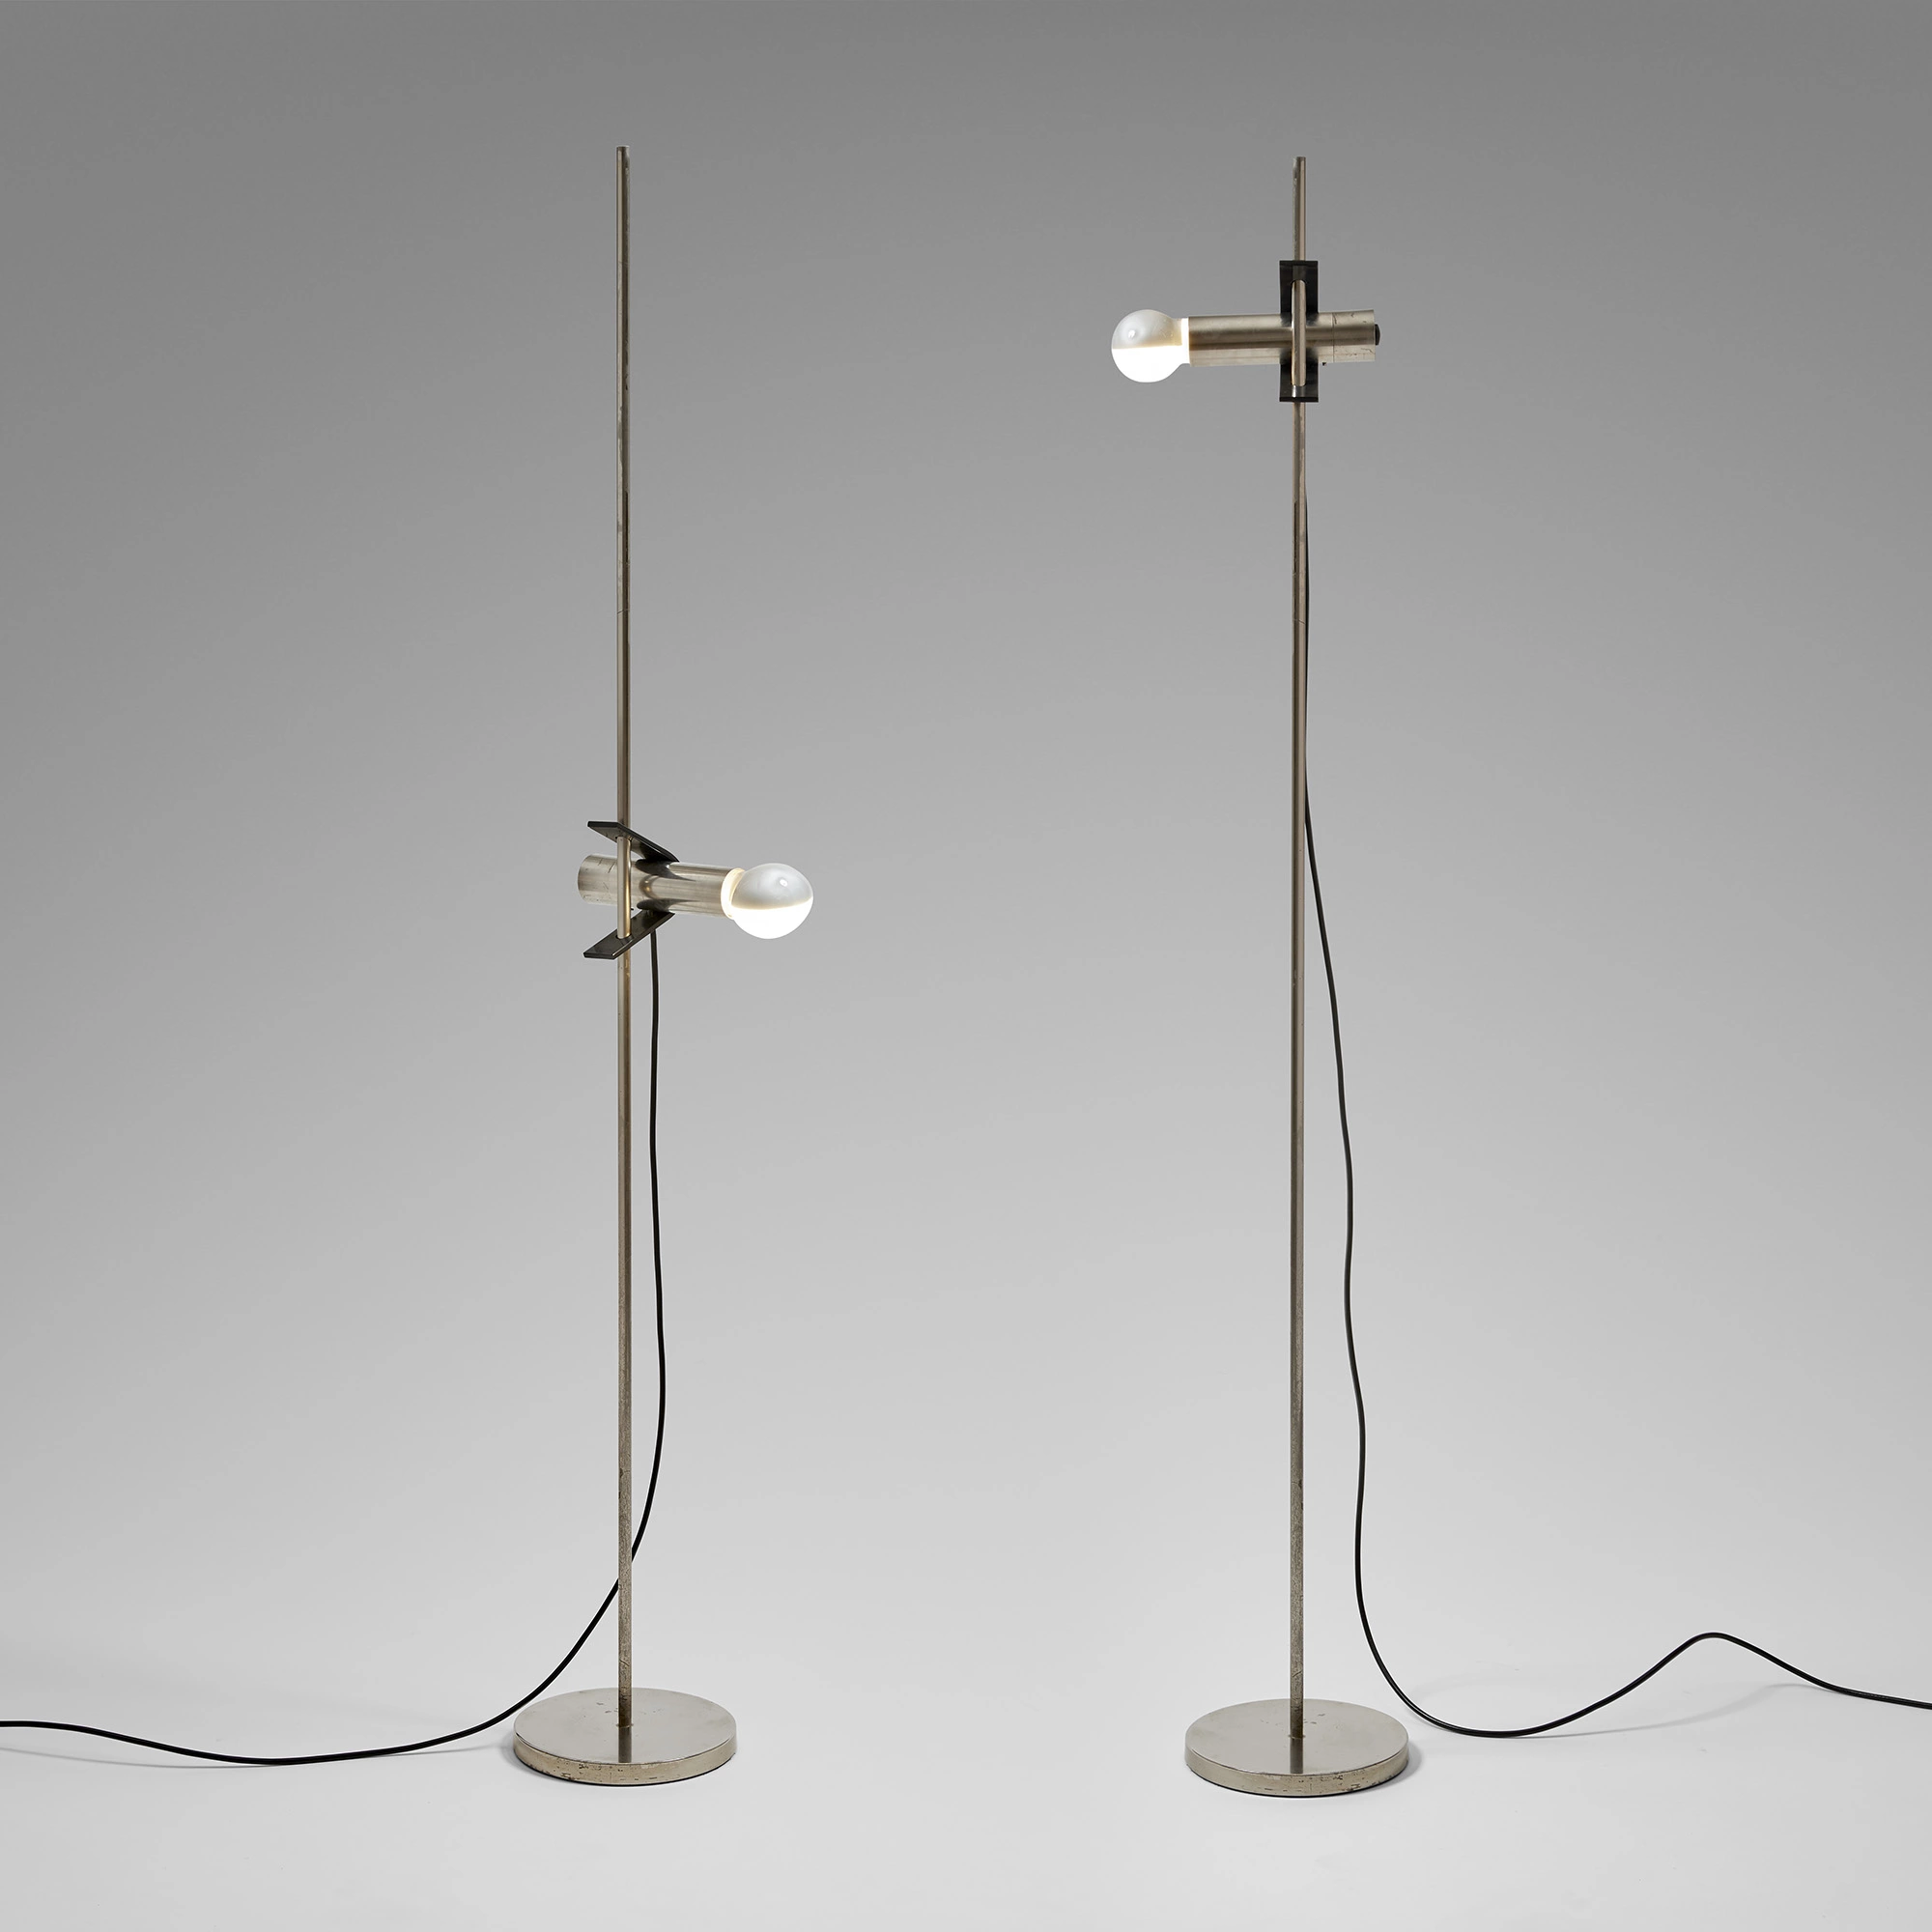 399  - Angelo and Renato Ostuni and Forti  - Floor light - Galerie kreo